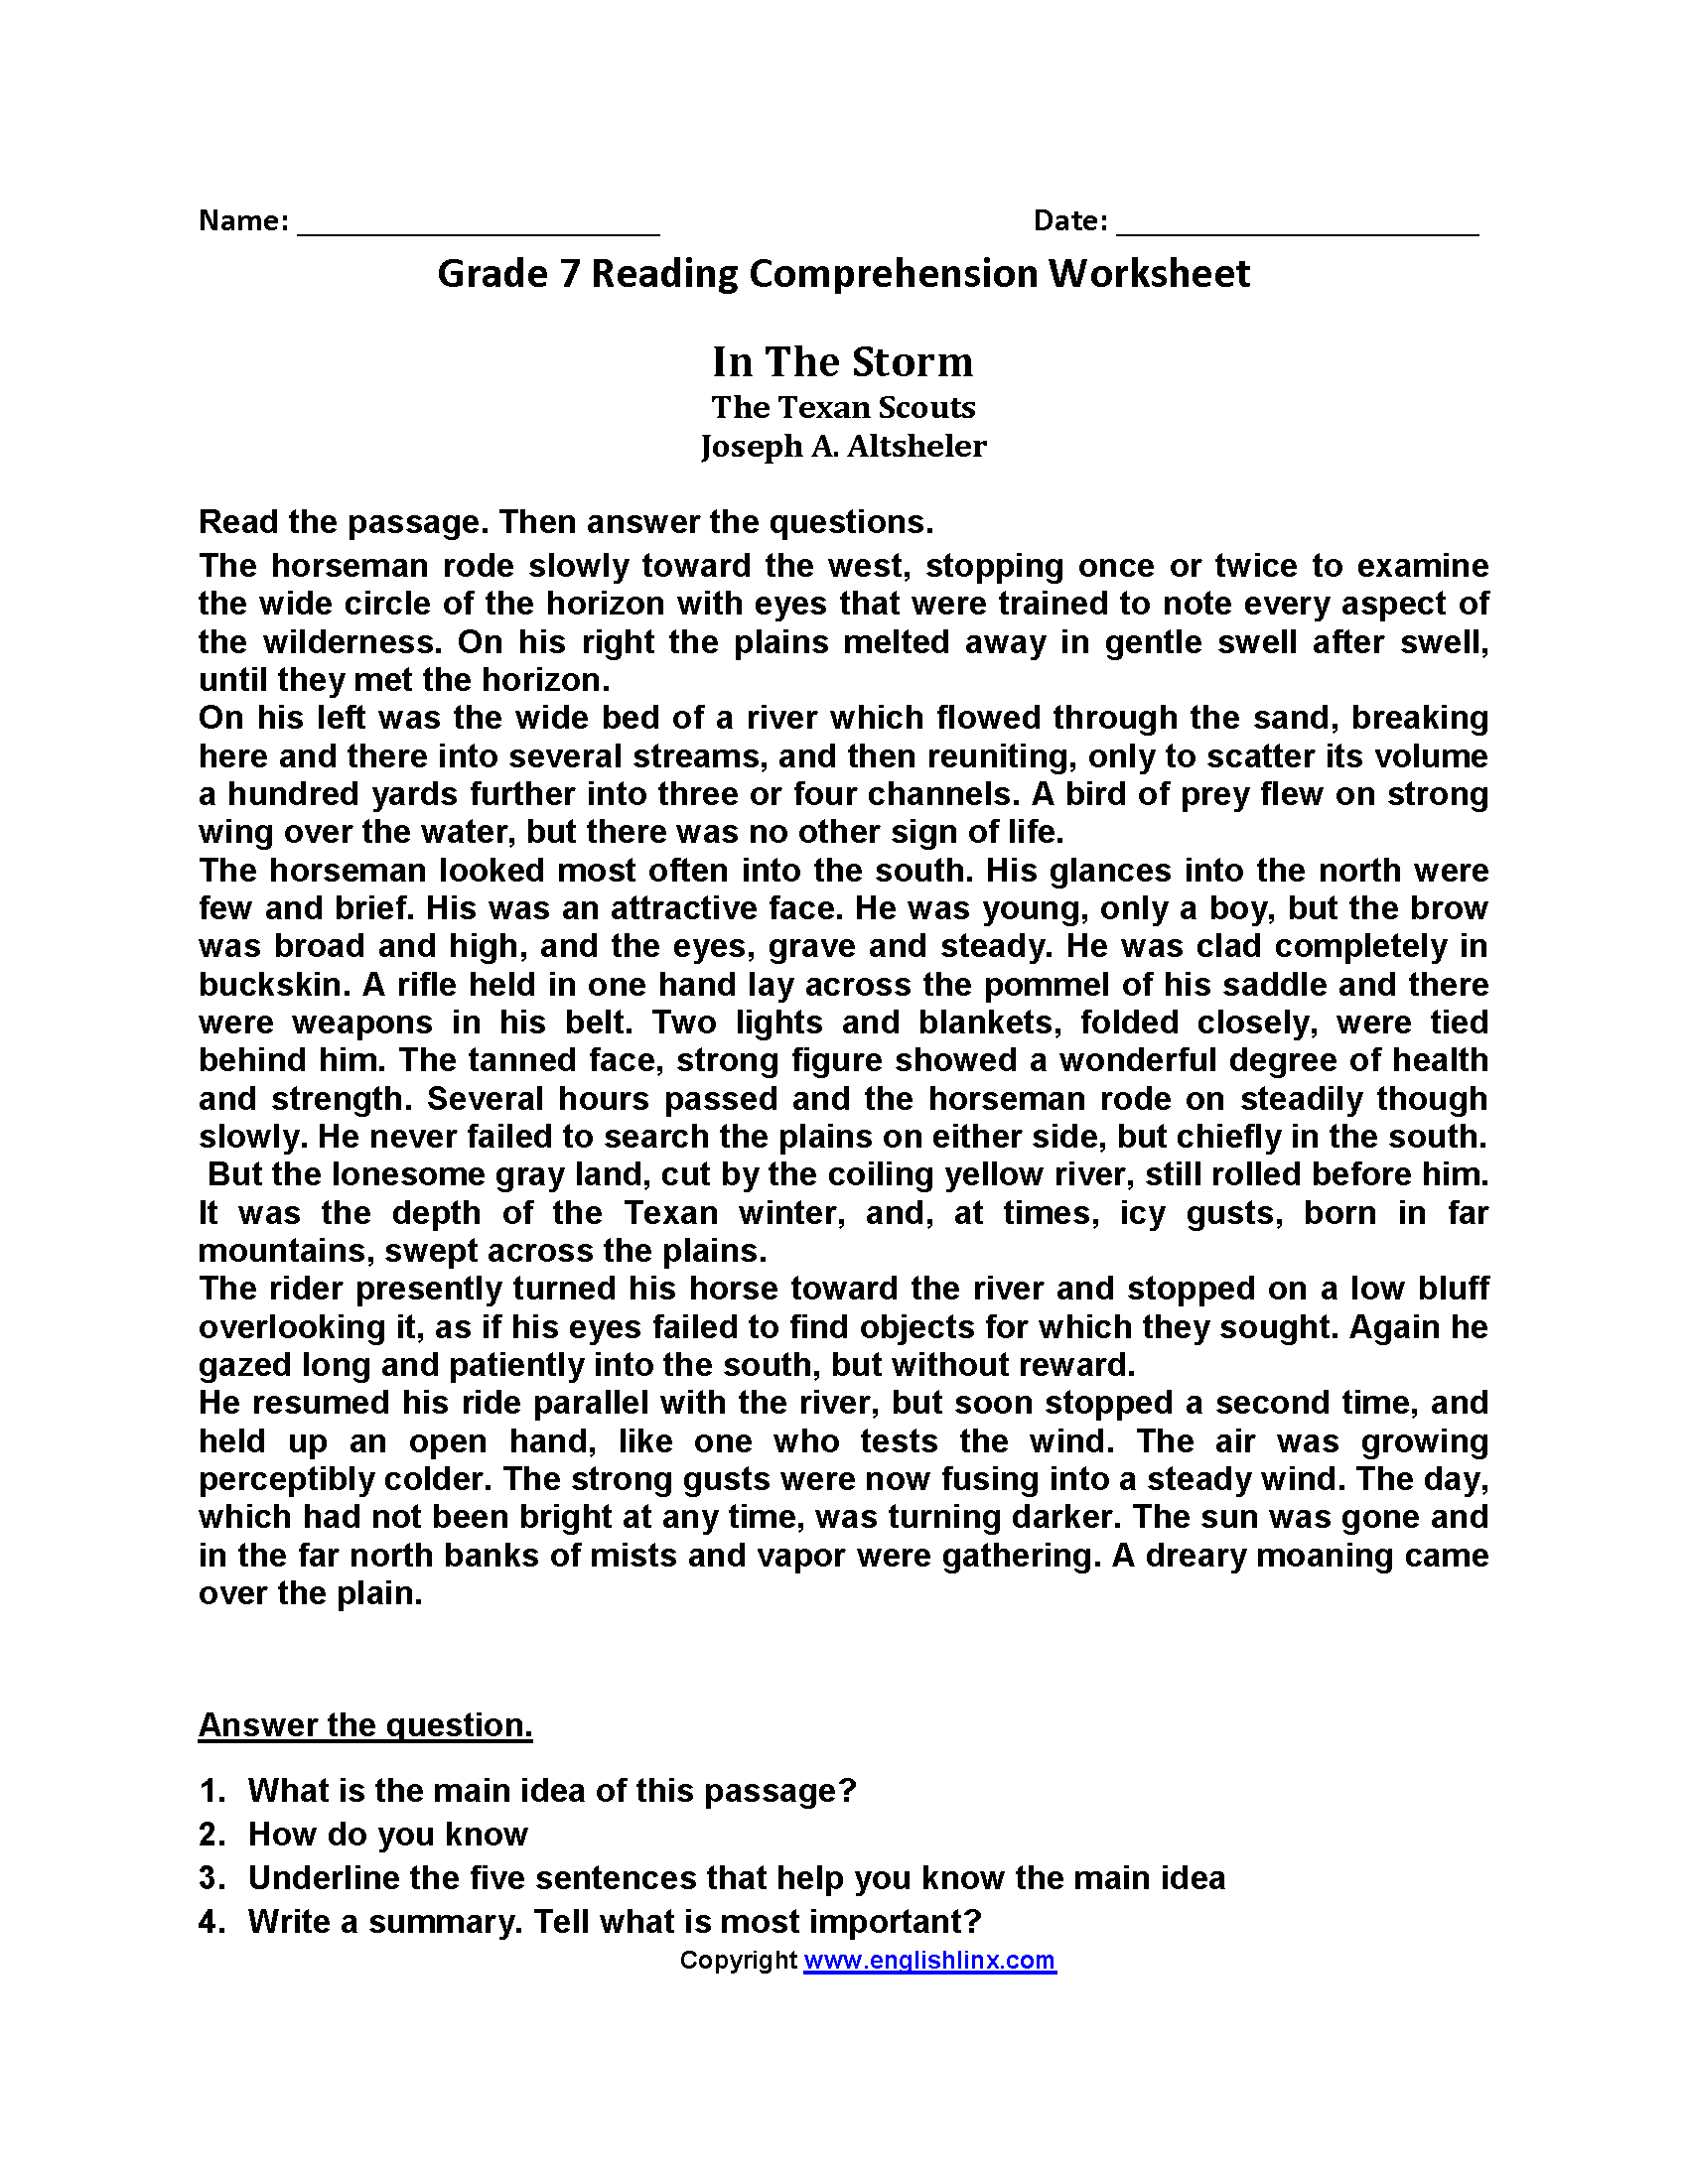 Reading Comprehension Worksheets For 7th Graders